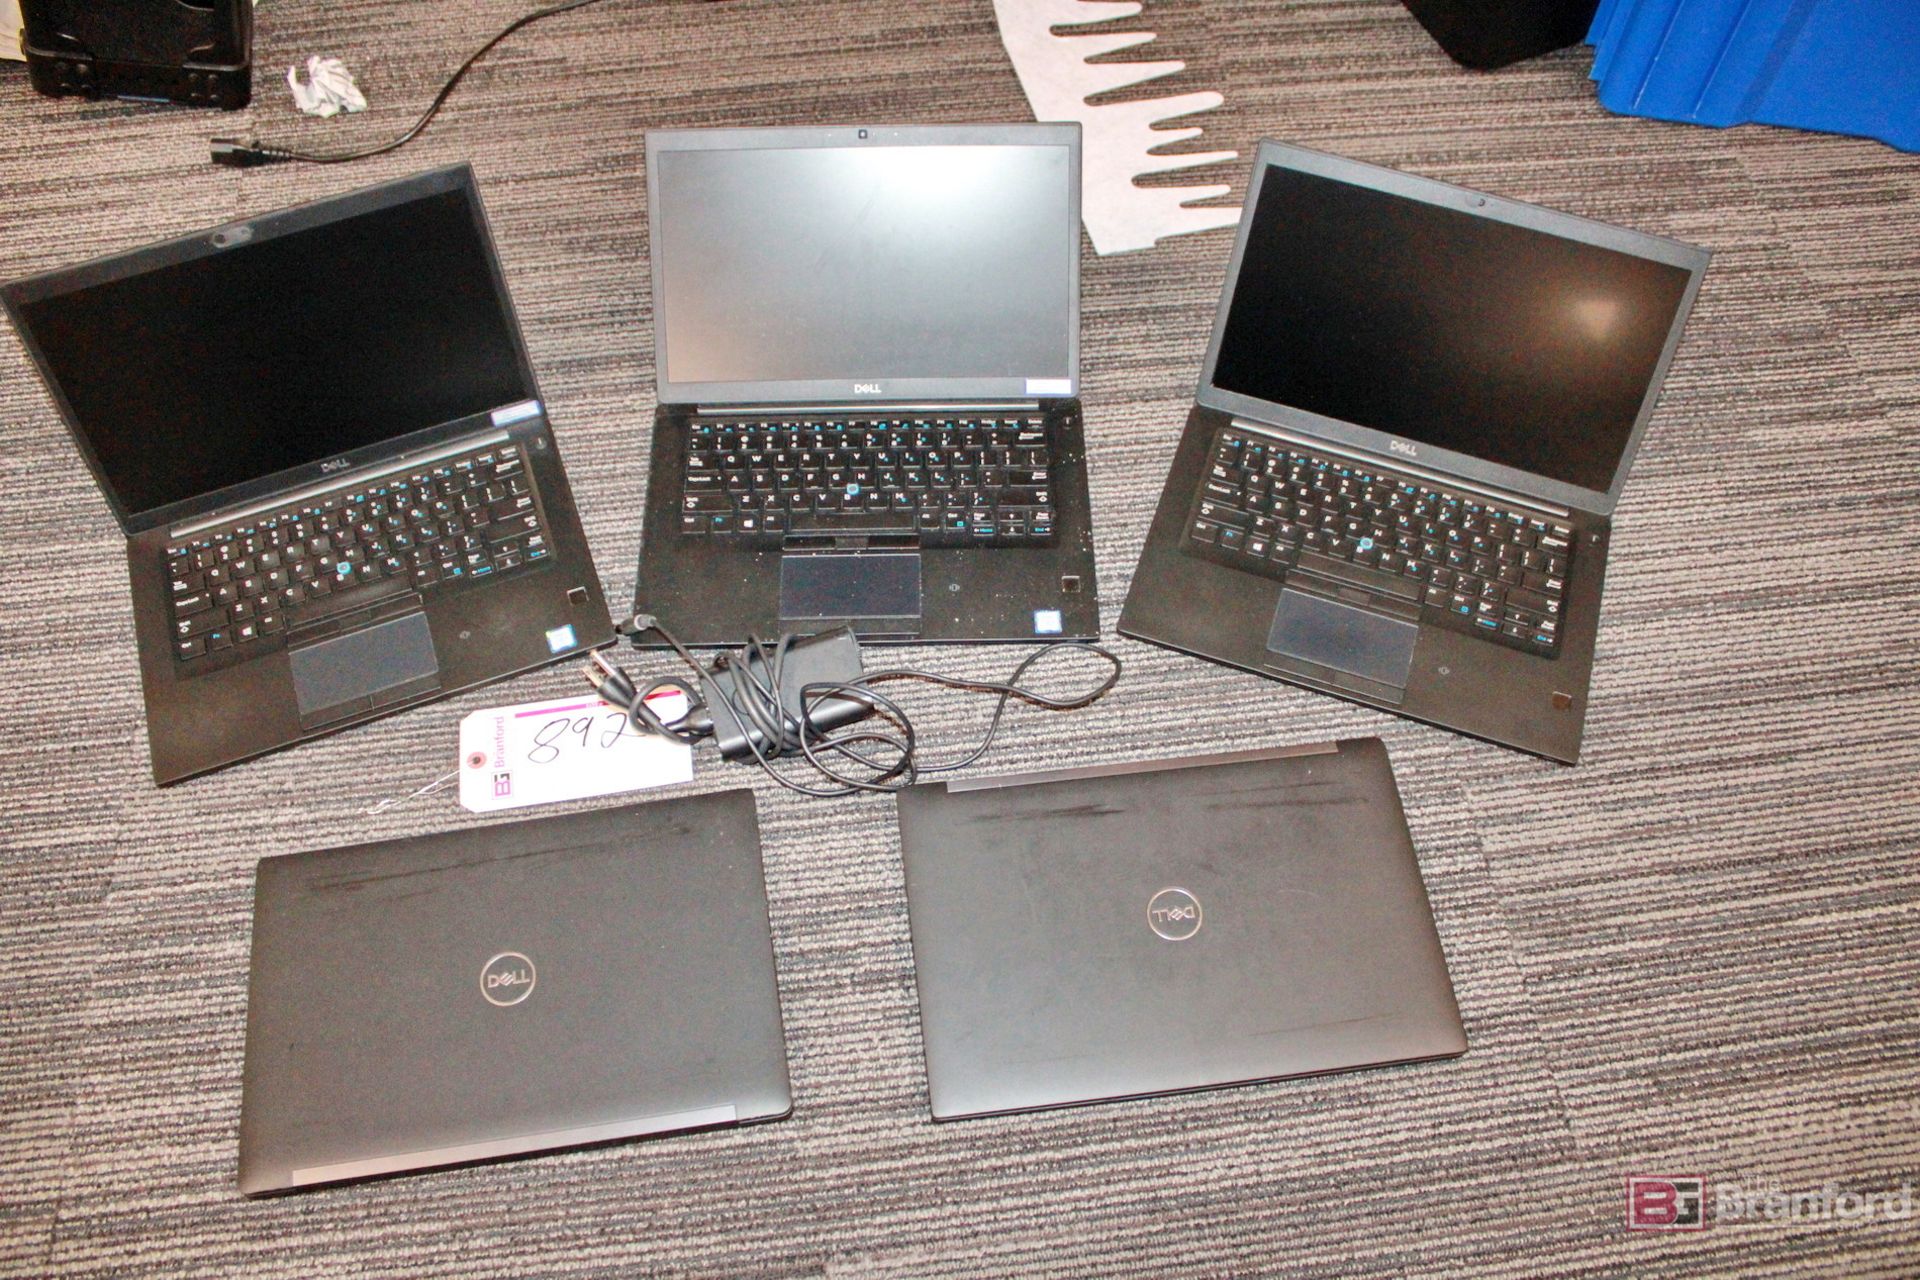 (5) Dell Latitude 7490 Laptops